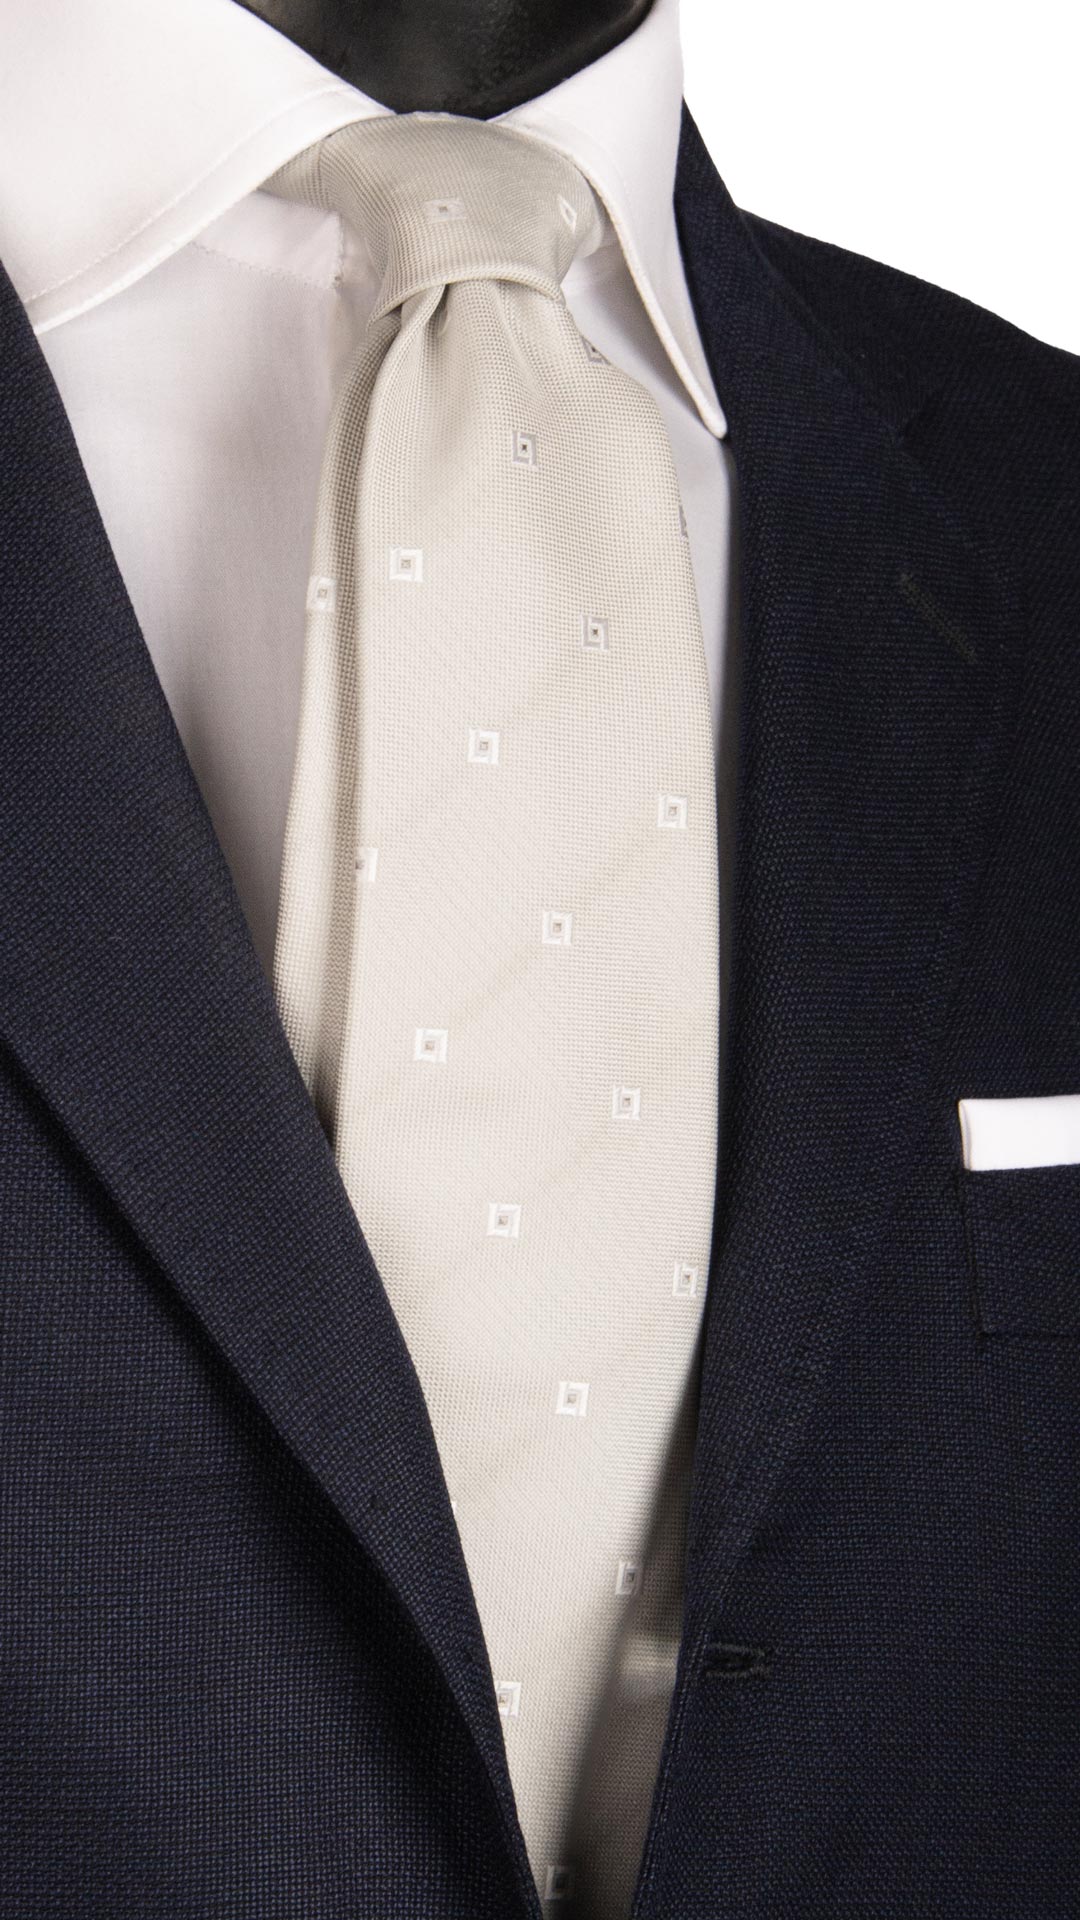 Cravatta da Cerimonia di Seta Grigio Perla Fantasia Bianca CY6652 Made in Italy Graffeo Cravatte